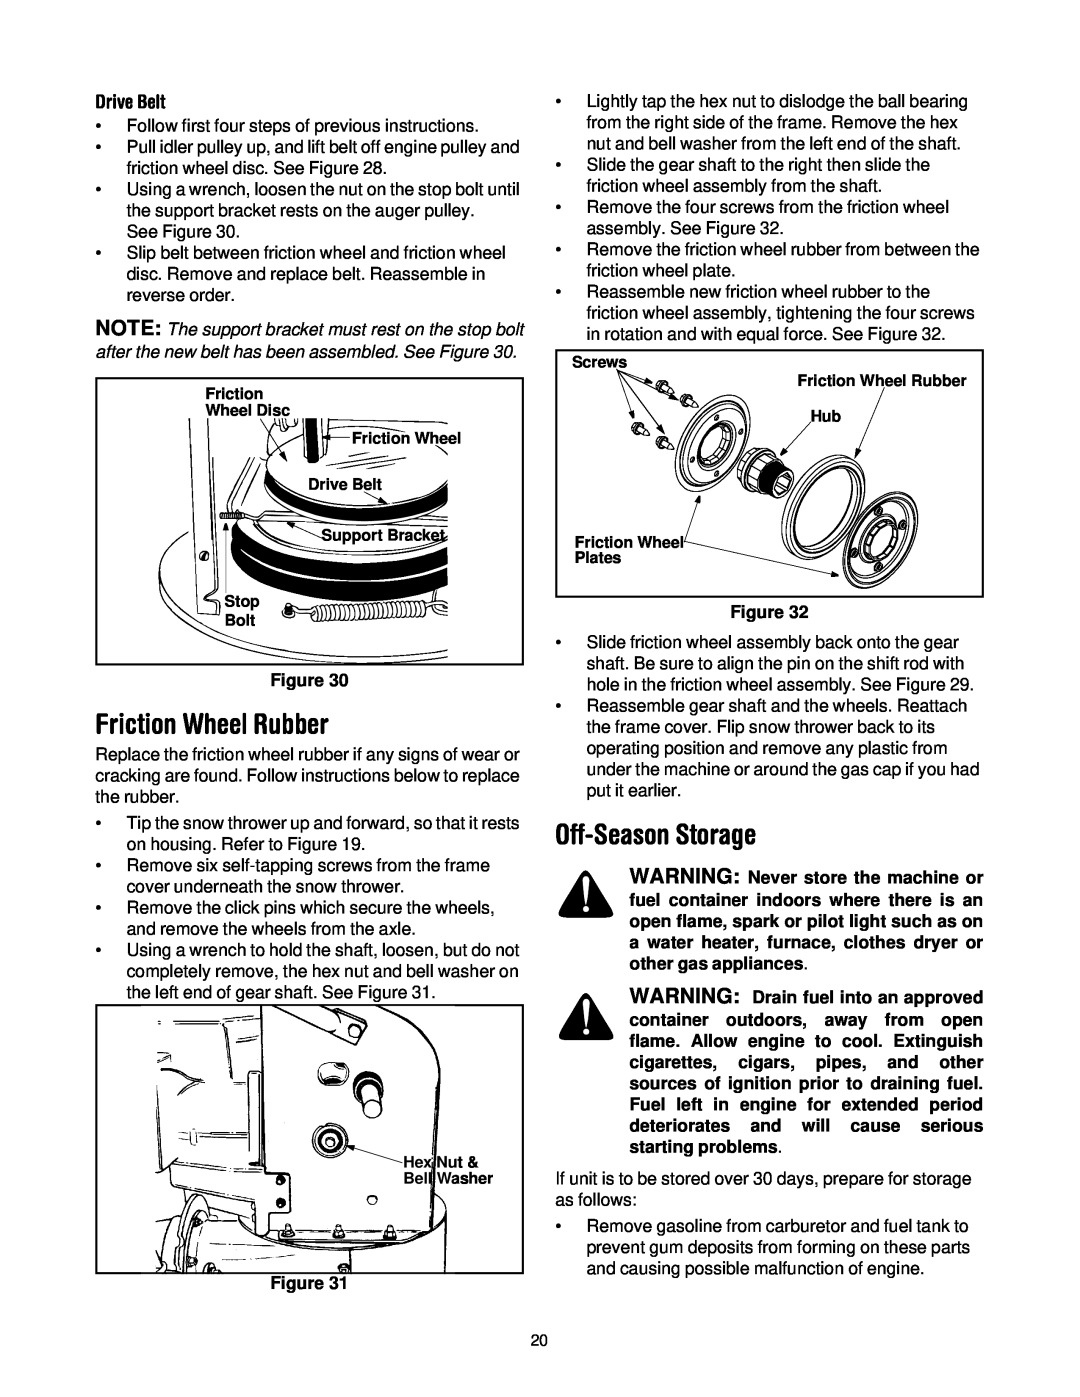 MTD 614E manual Friction Wheel Rubber, Off-Season Storage, Drive Belt 